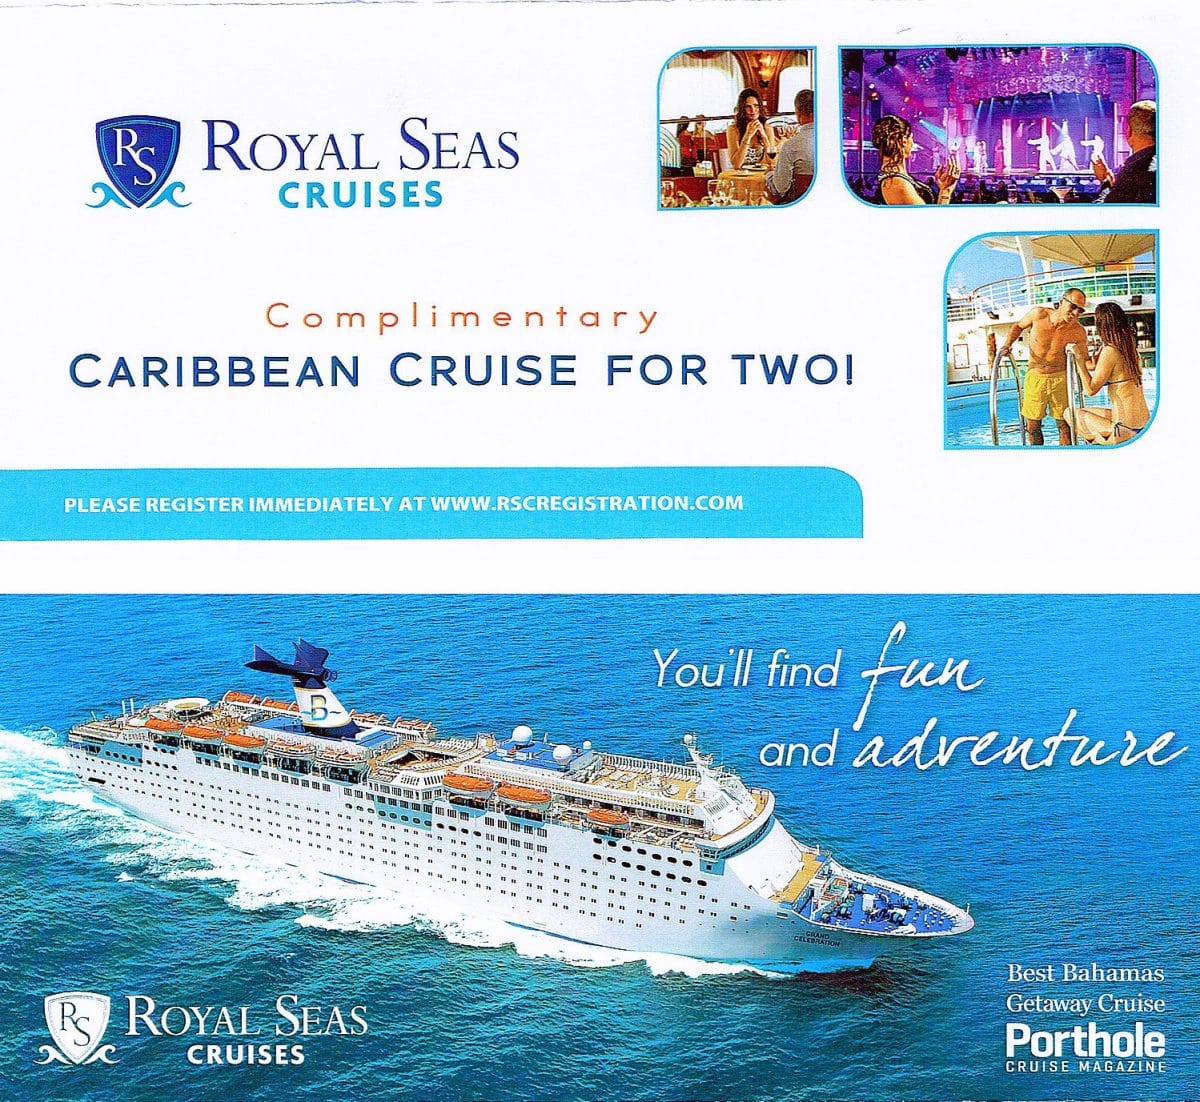 Royal Seas Cruises